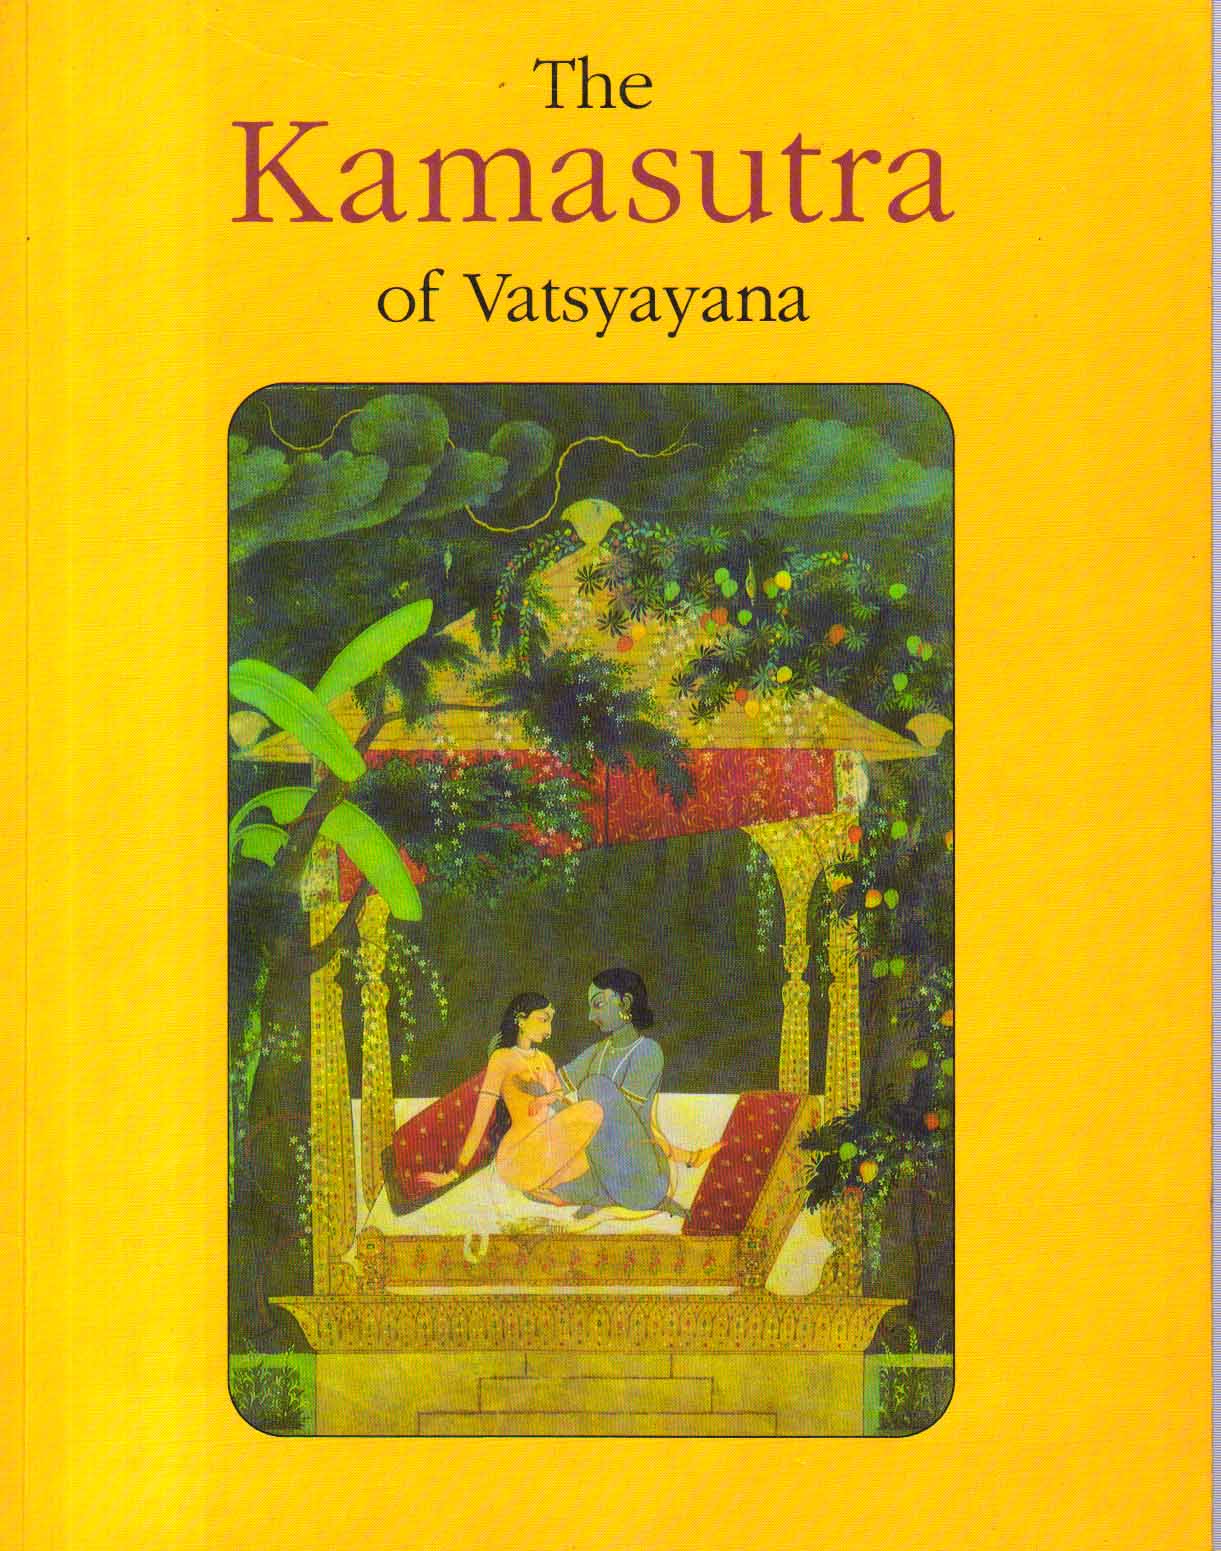 The Kamasutra of Vatsyayana.